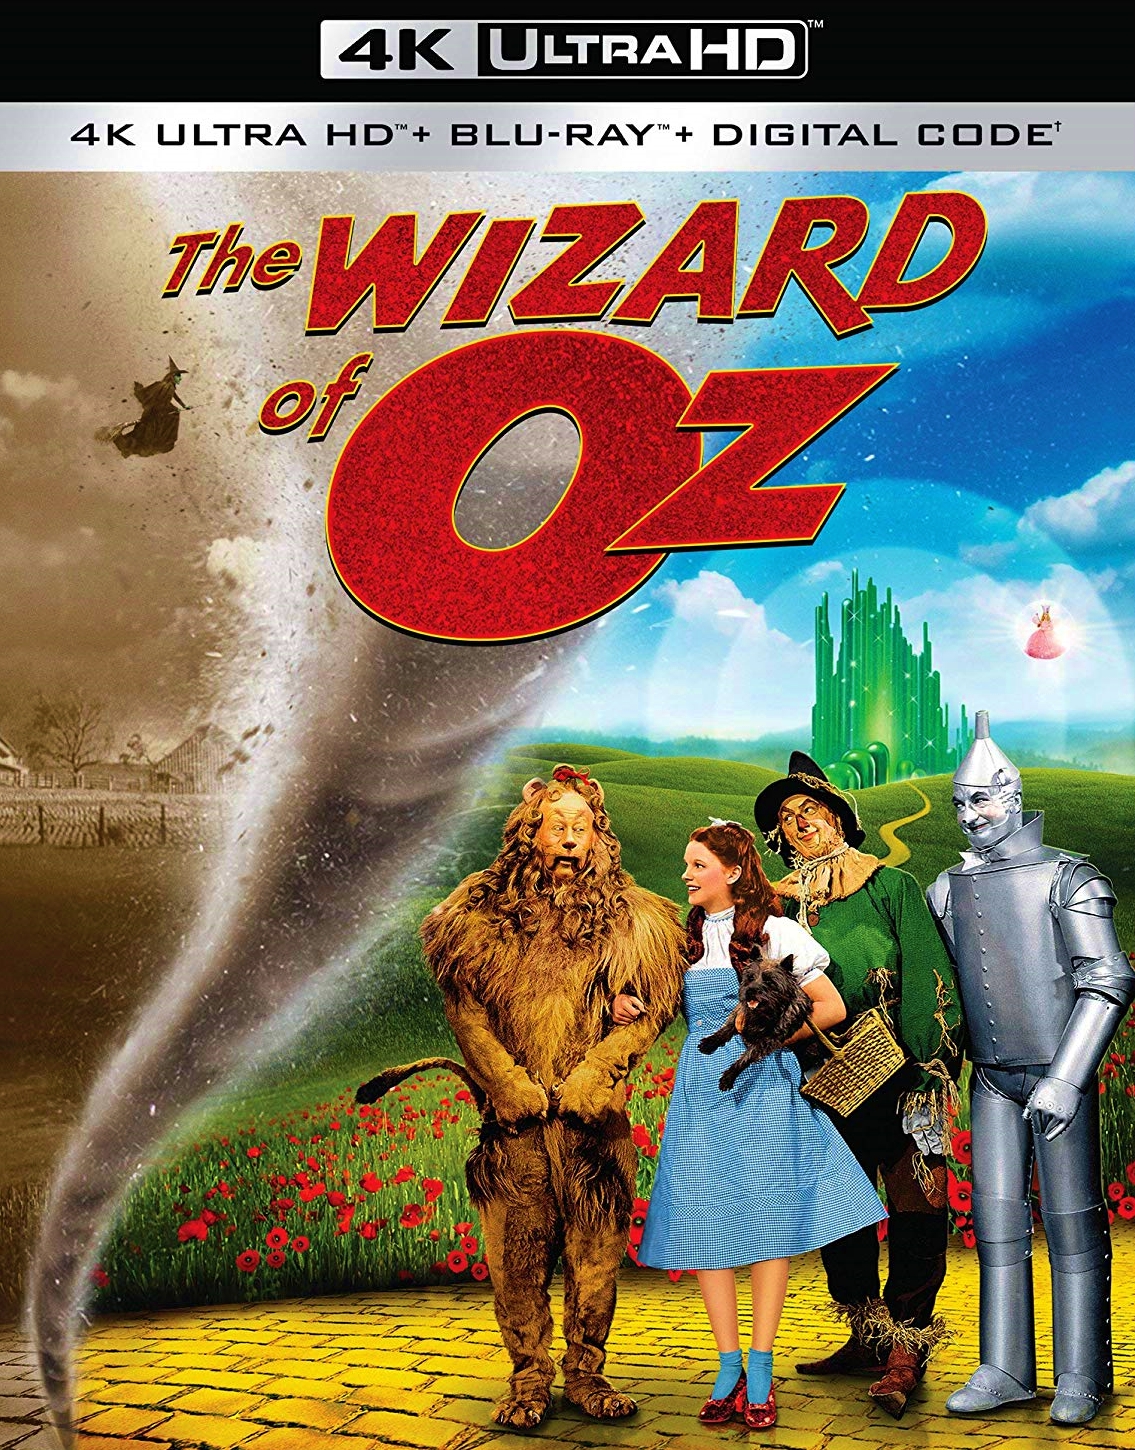 THE WIZARD OF OZ: 4K UHD Blu-ray (MGM, 1939) Warner Home Video